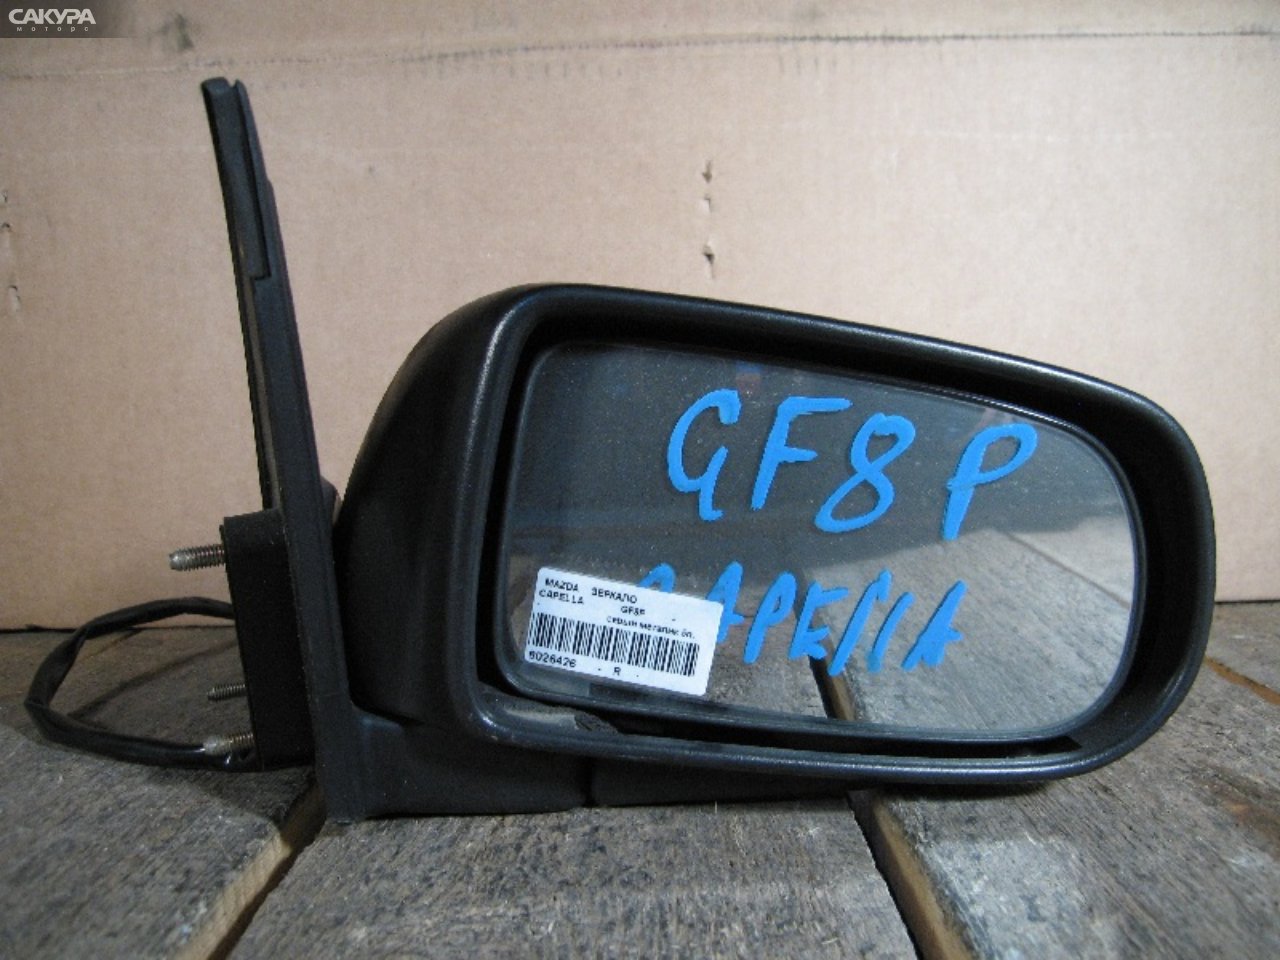 Зеркало боковое правое Mazda Capella GF8P: купить в Сакура Абакан.